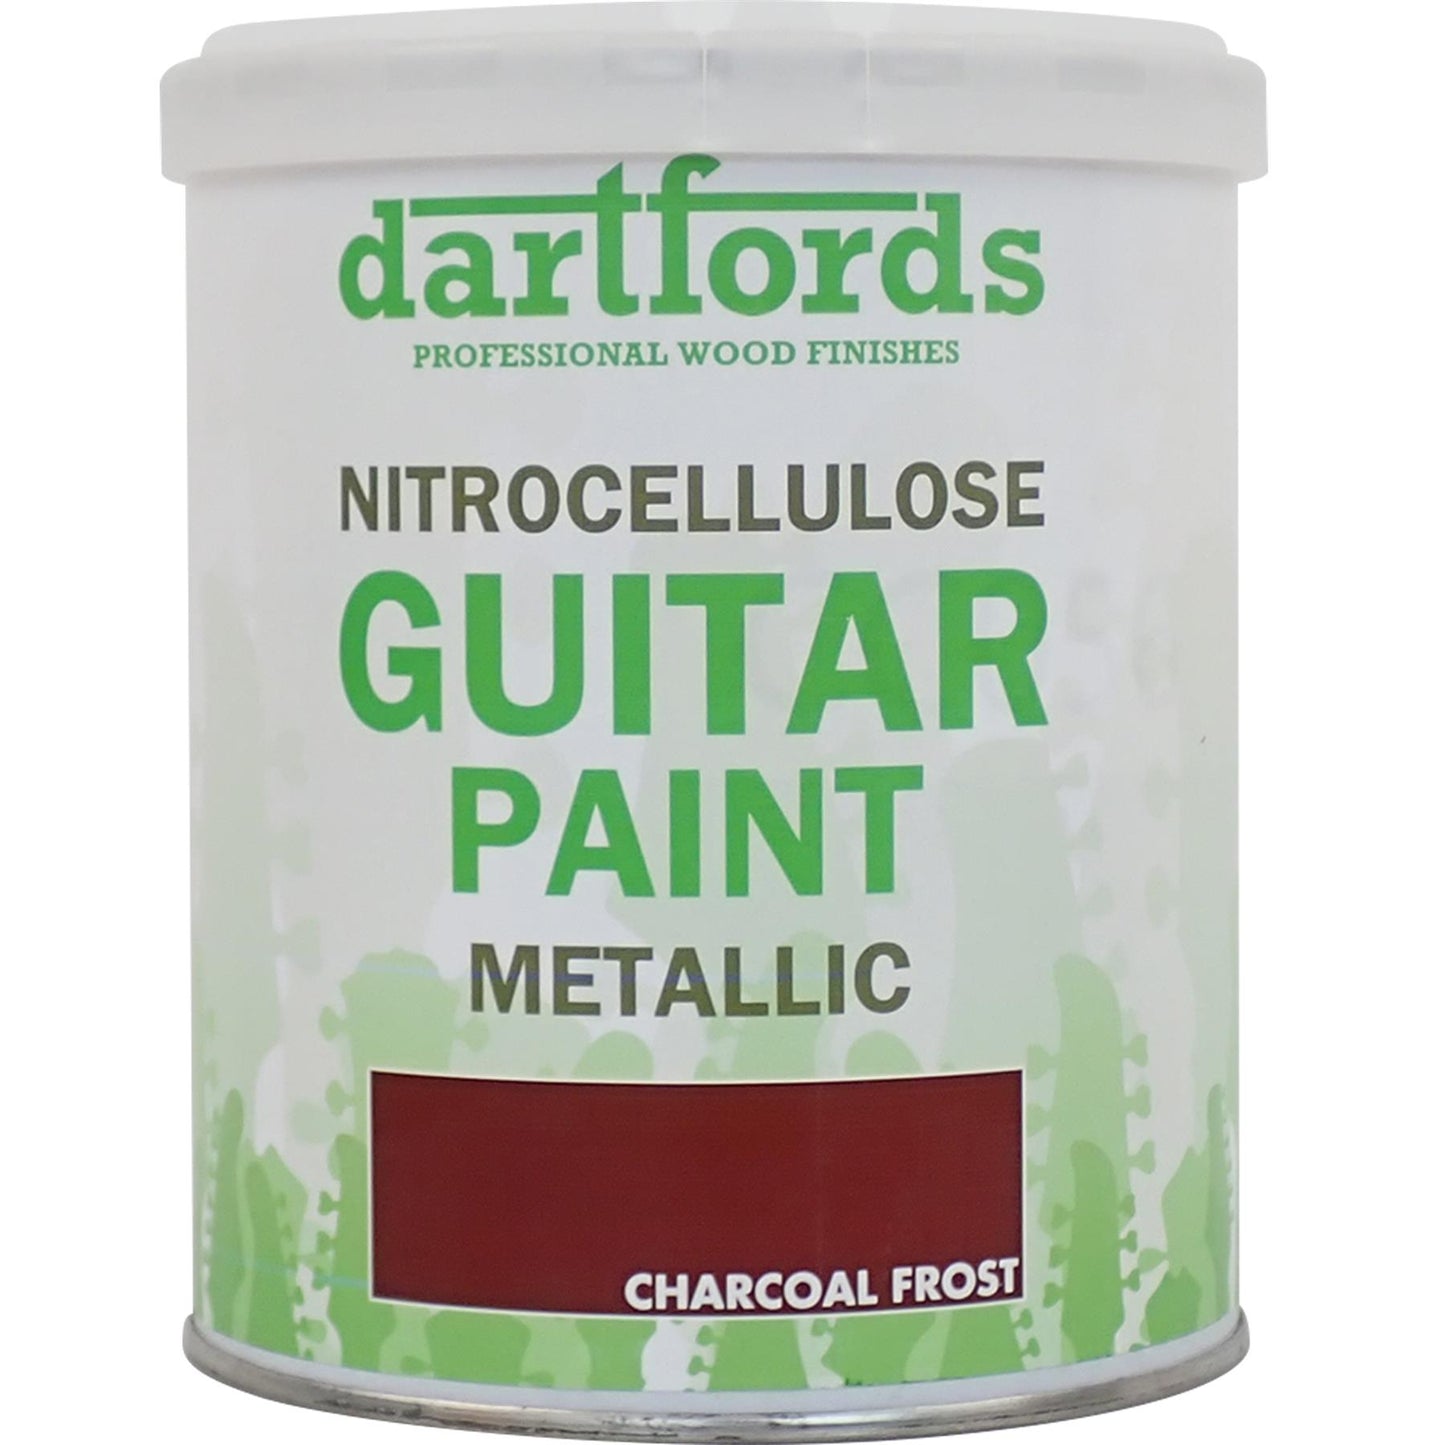 dartfords Charcoal Frost Metallic Nitrocellulose Guitar Paint - 1 litre Tin